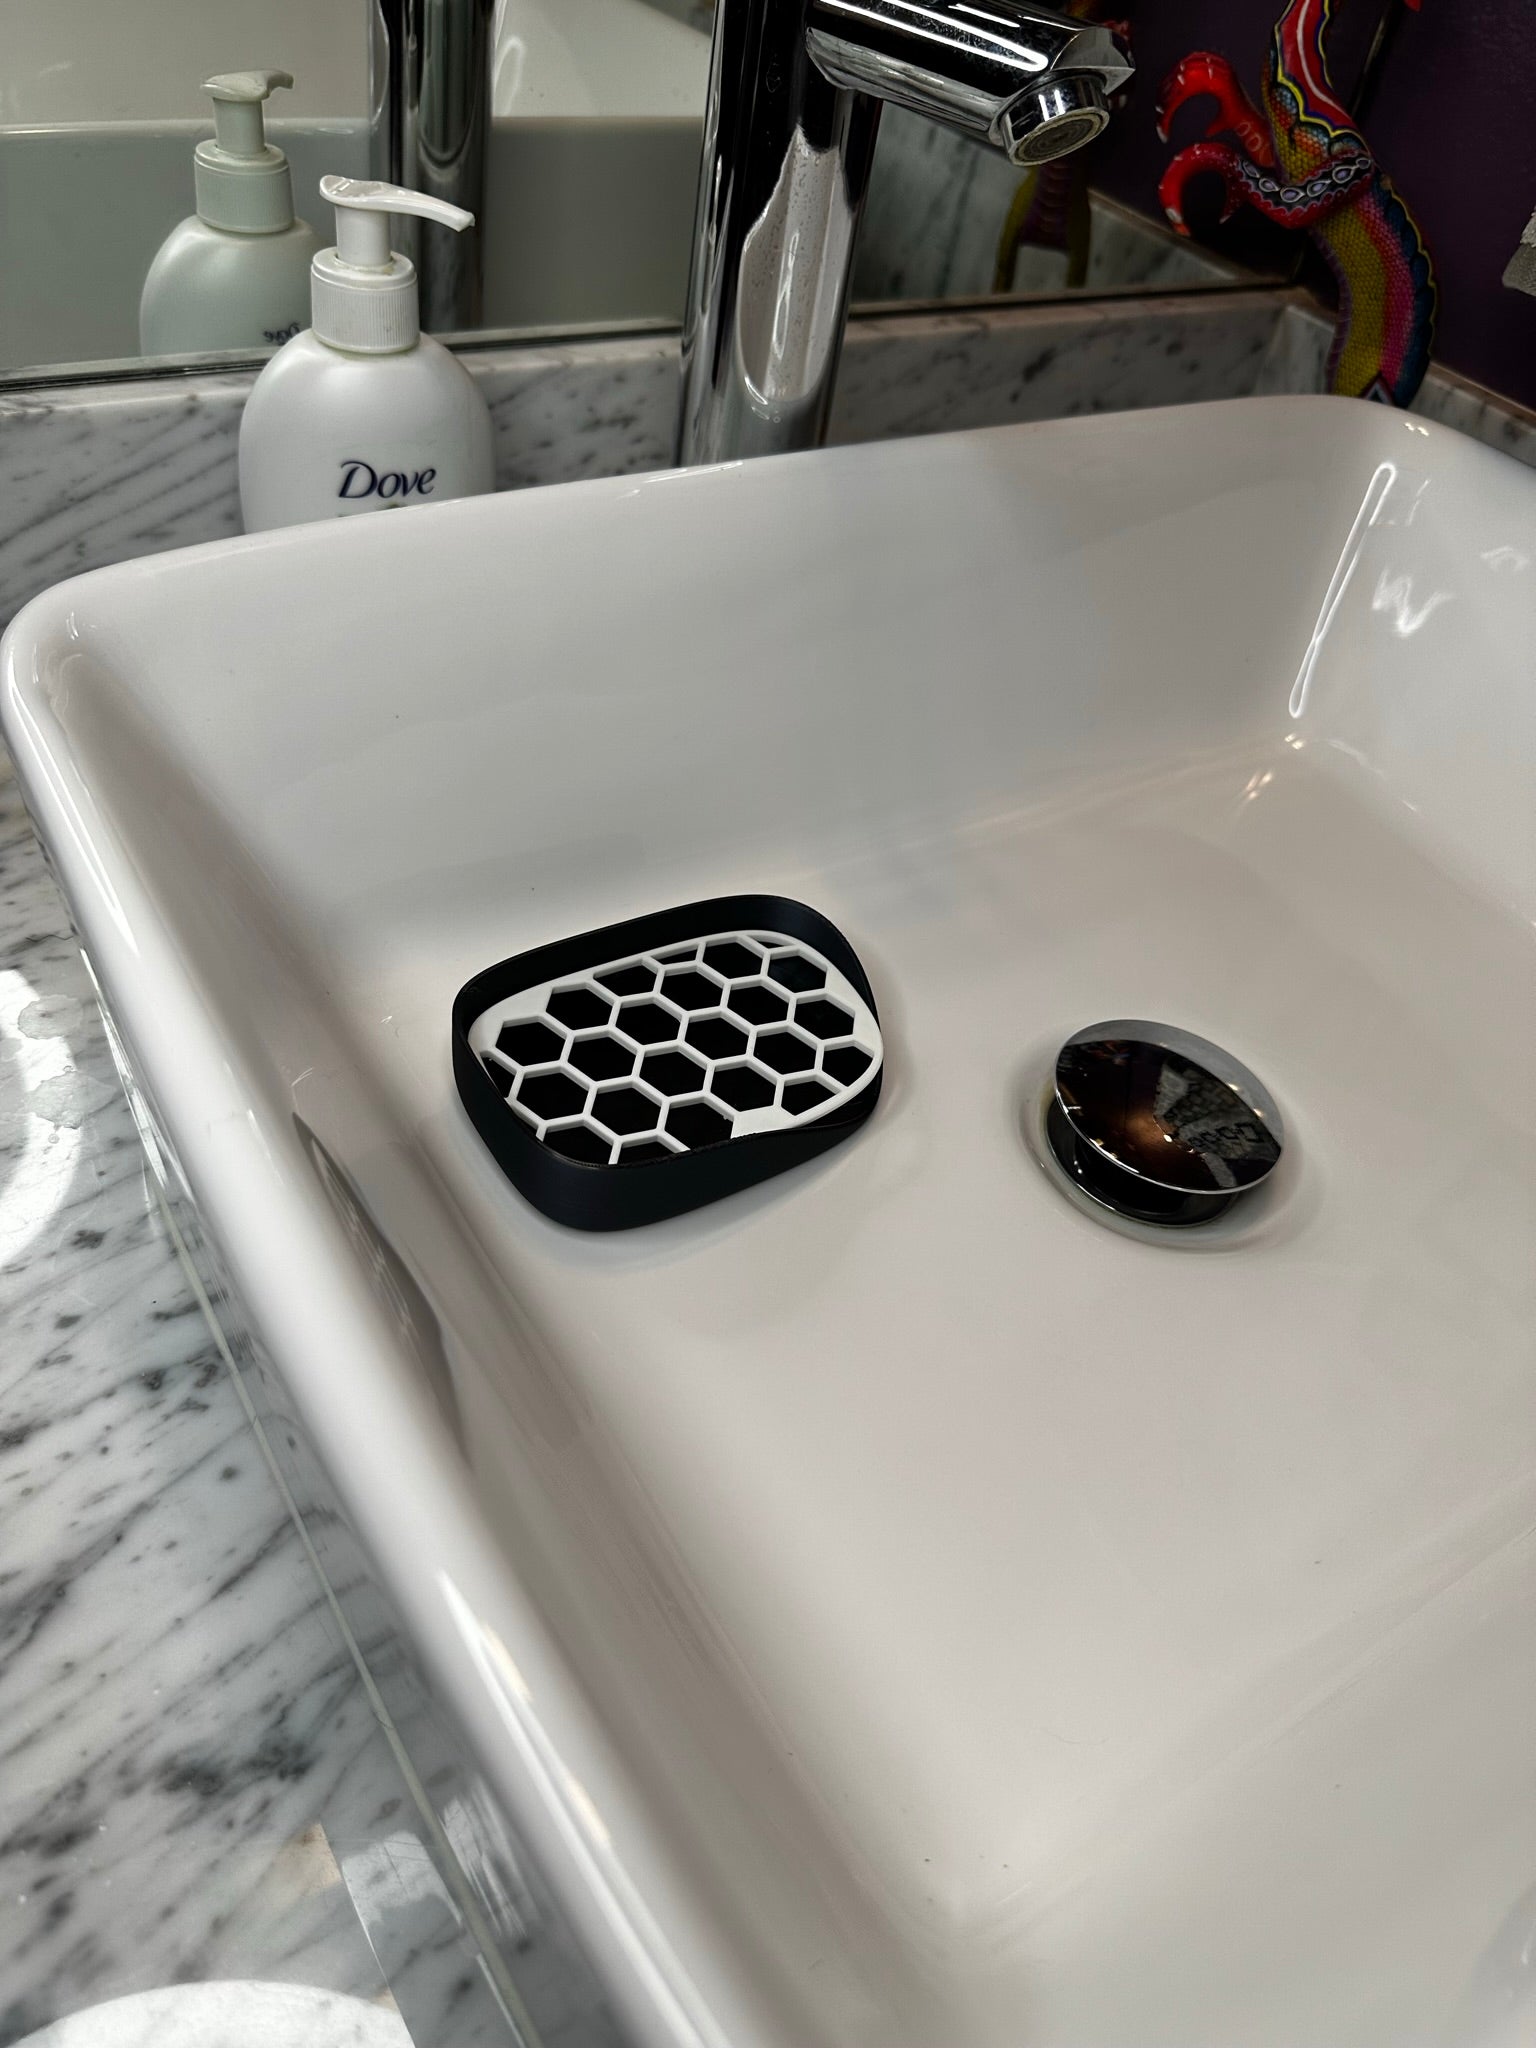 3D printed hexagon pattern soap dish in bathroom setting